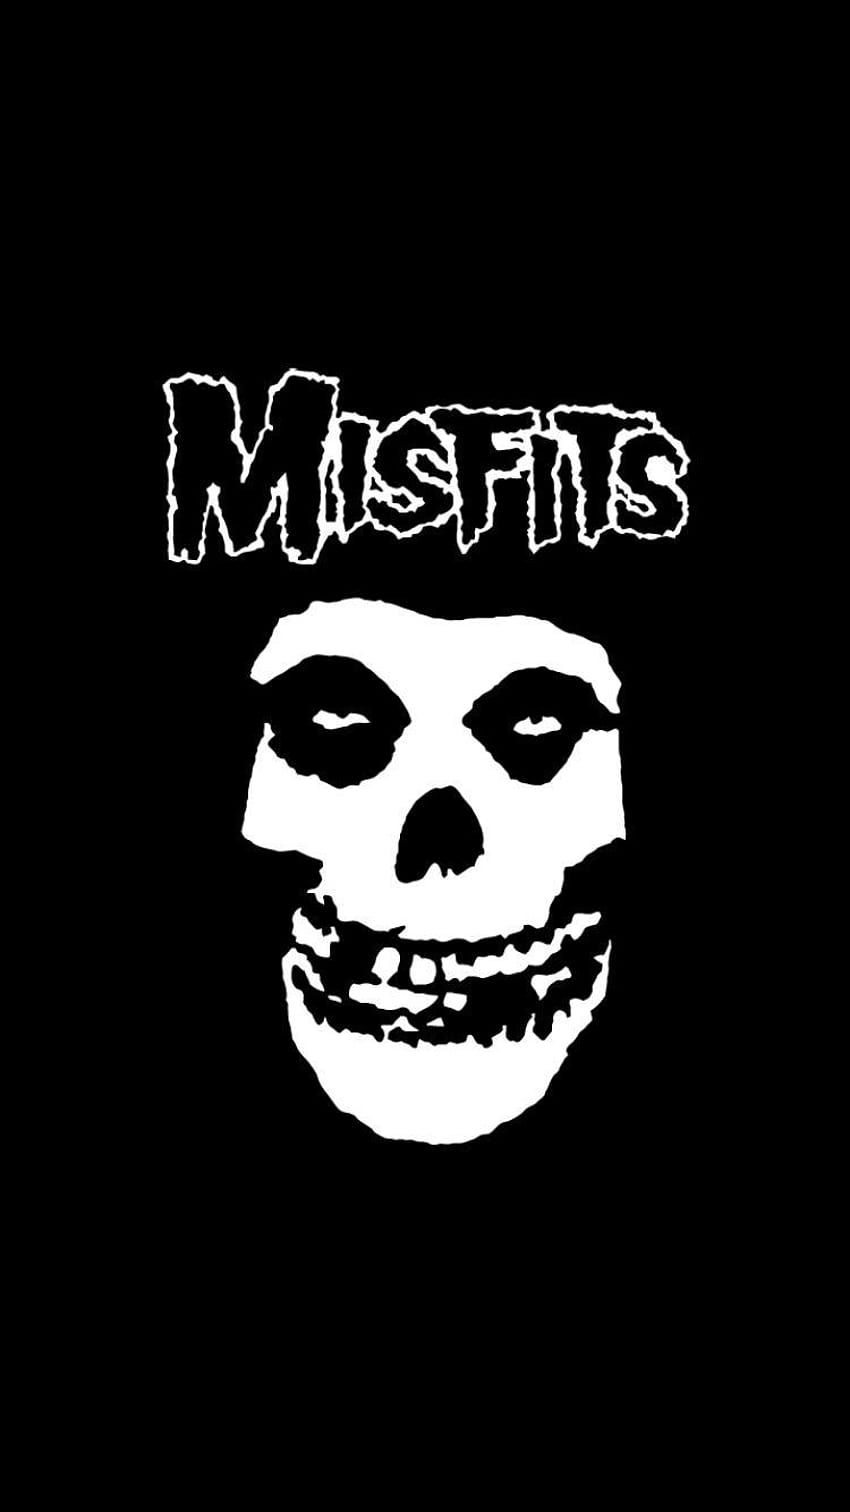 Música/Misfits, celular de música metal Papel de parede de celular HD